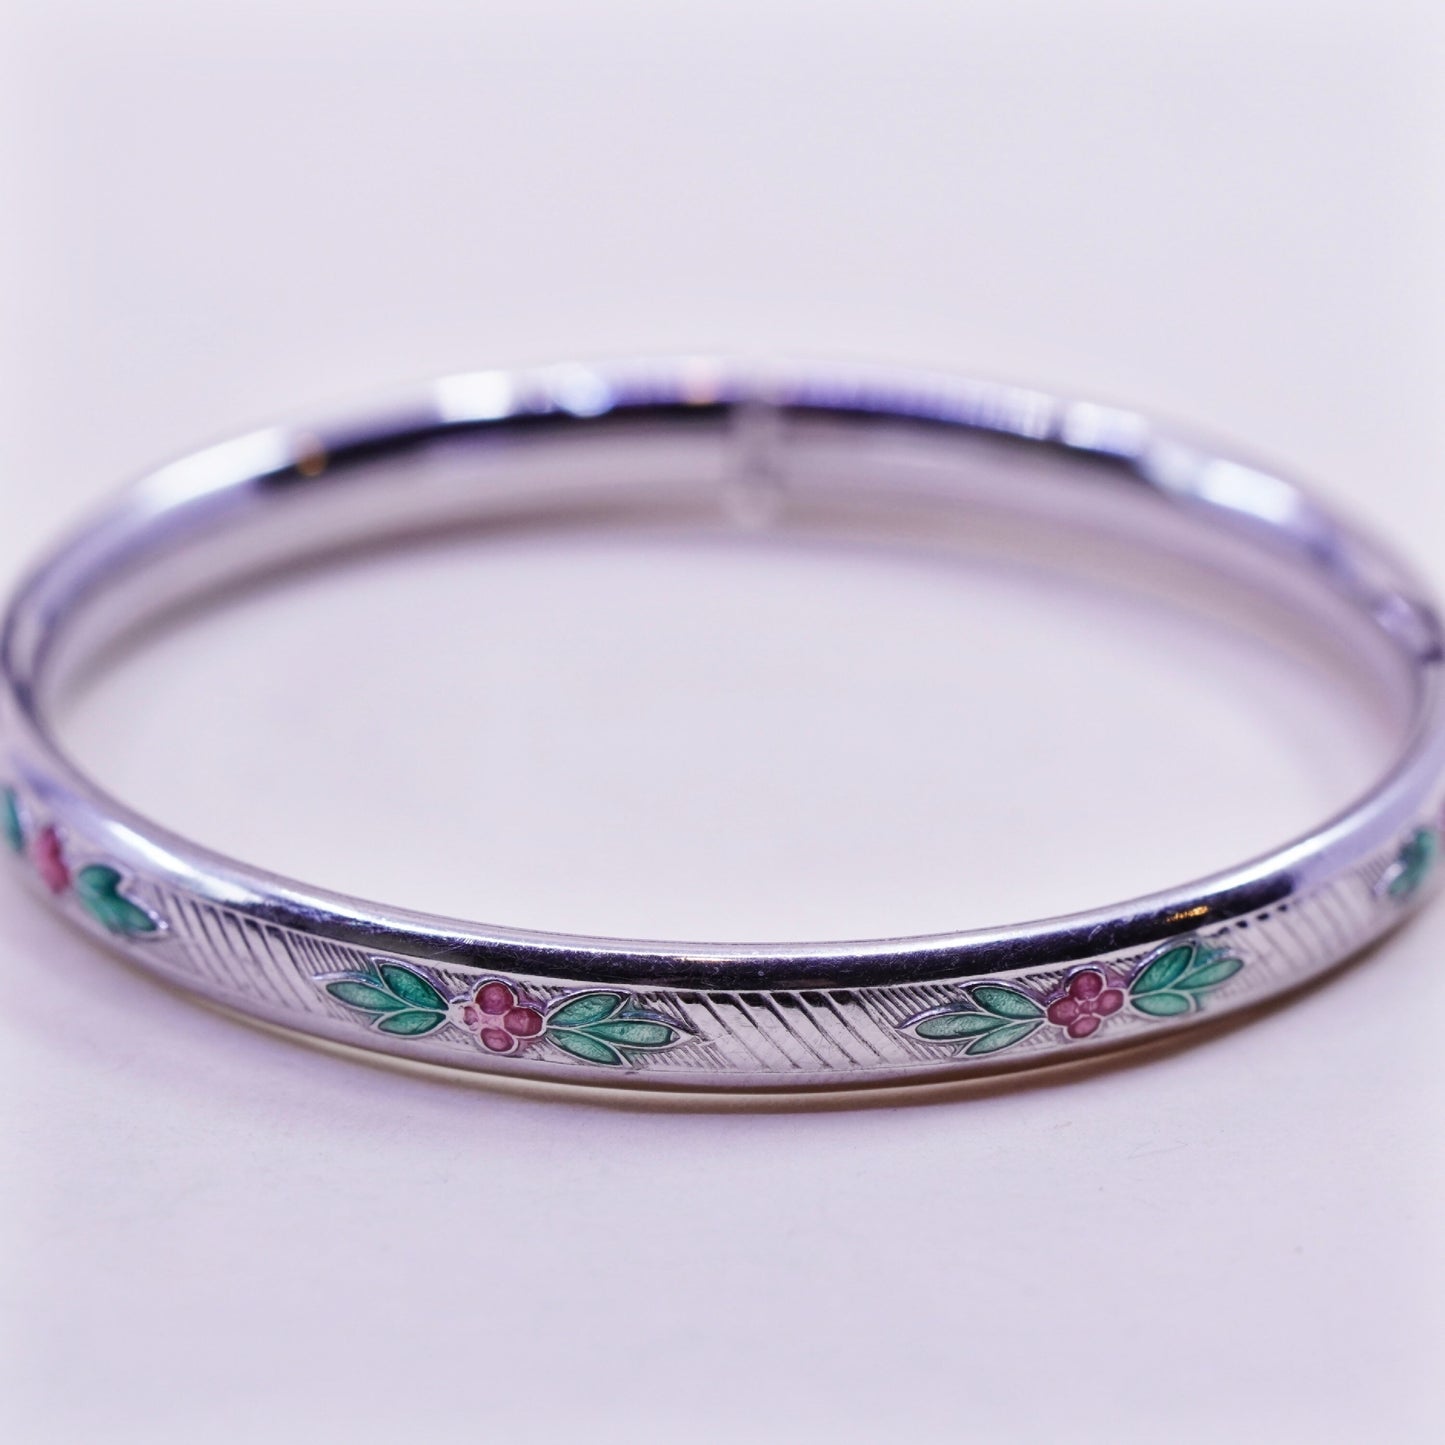 Size 5.25”, Sterling silver baby bracelet, Mexico 925 bangle enamel flower